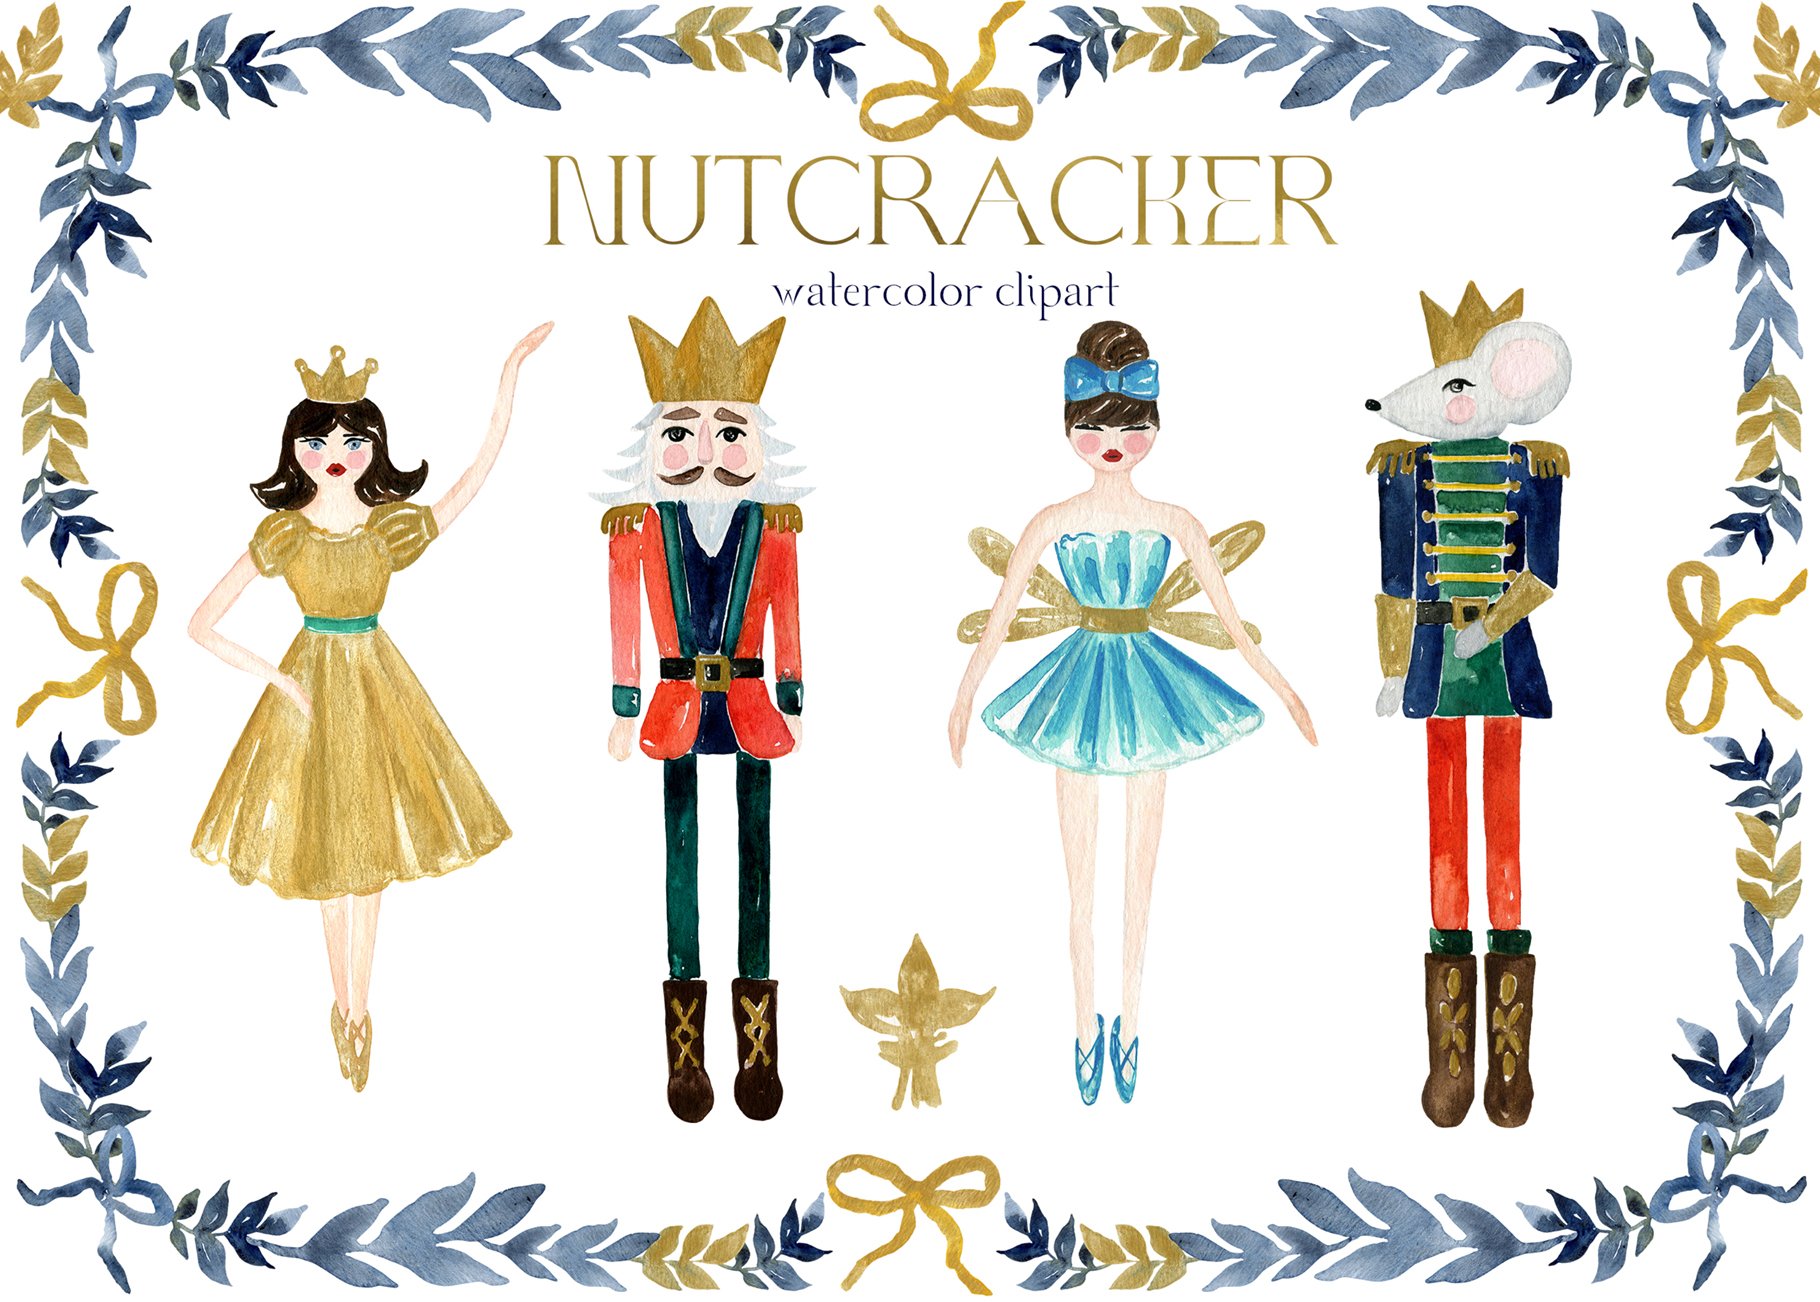 The Nutcracker Ballet Watercolor Illustrations